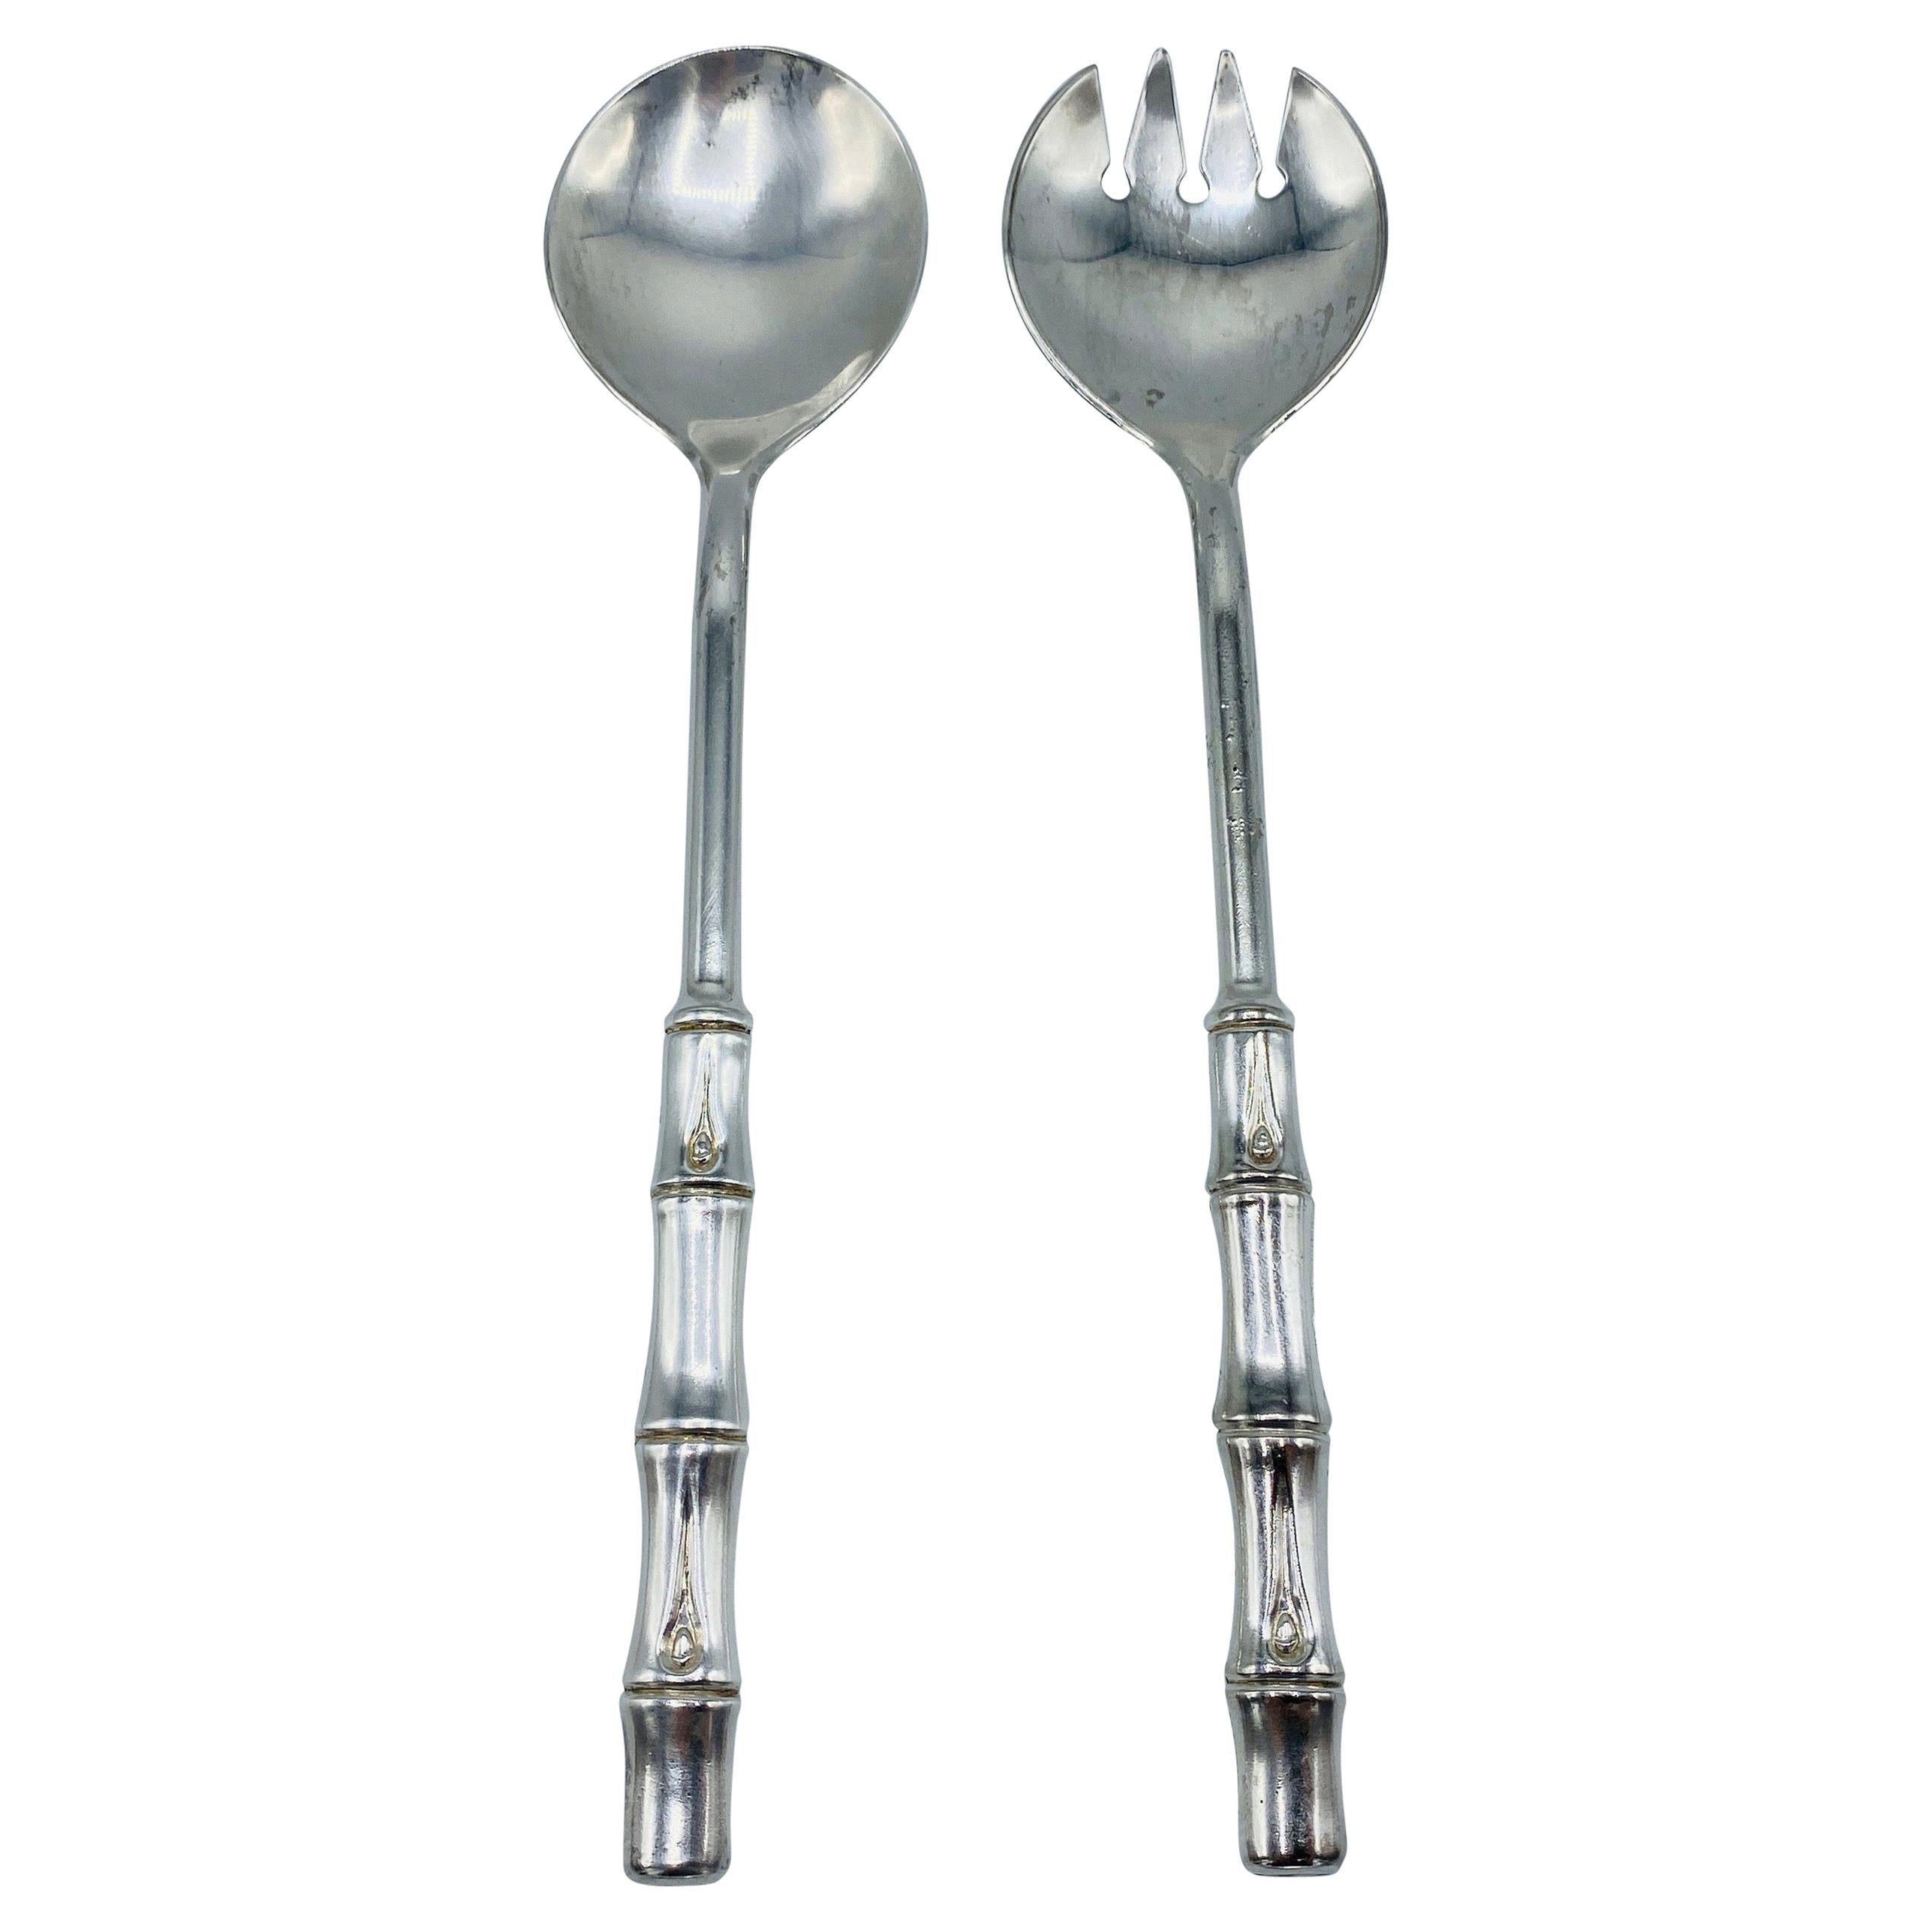 https://a.1stdibscdn.com/1960s-italian-silver-plate-faux-bamboo-salad-utensils-set-for-sale/1121189/f_166656921572606048922/16665692_master.jpg